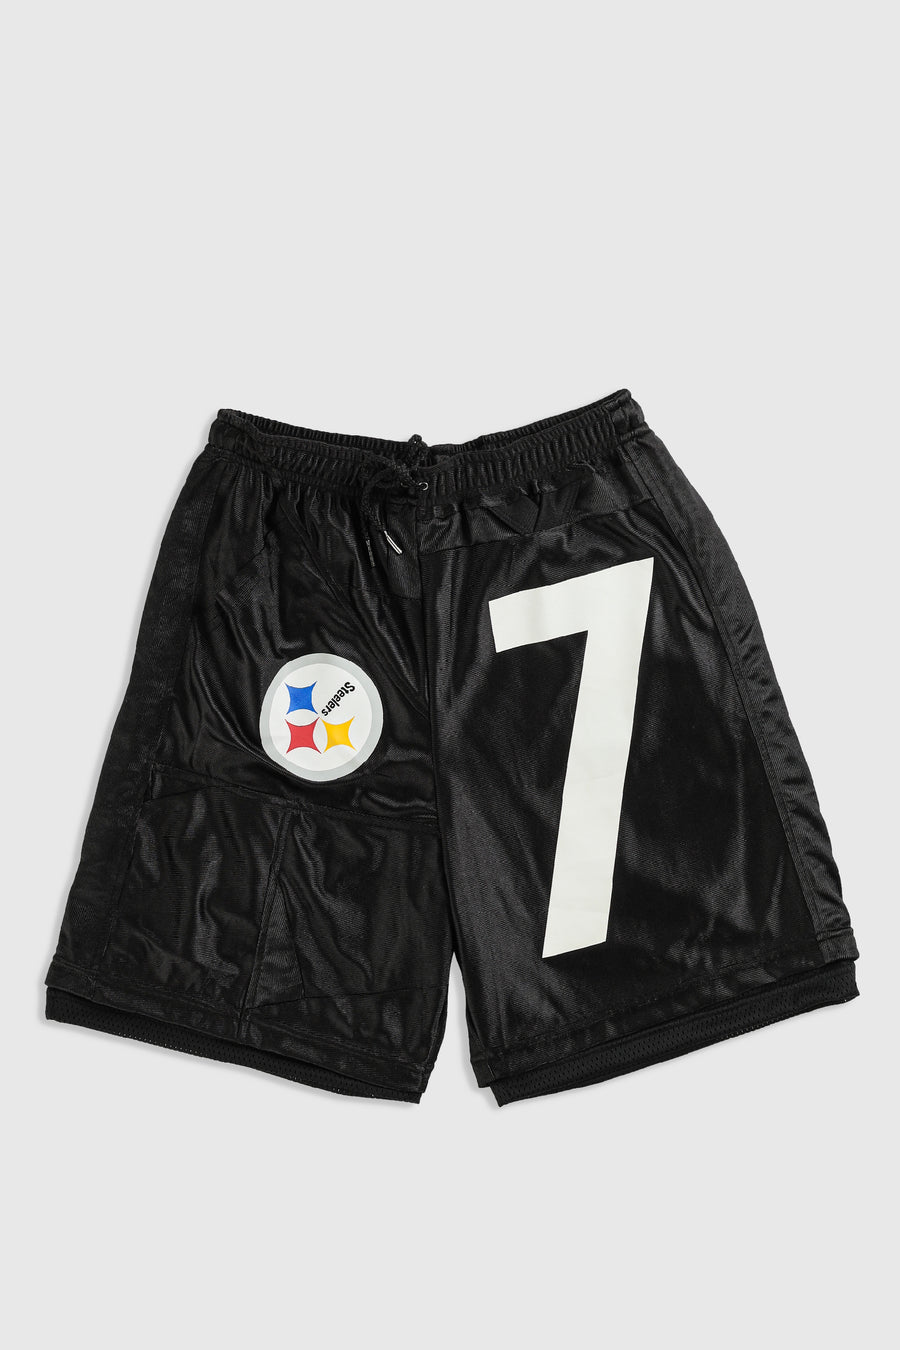 Unisex Rework Steelers NFL Jersey Shorts - S